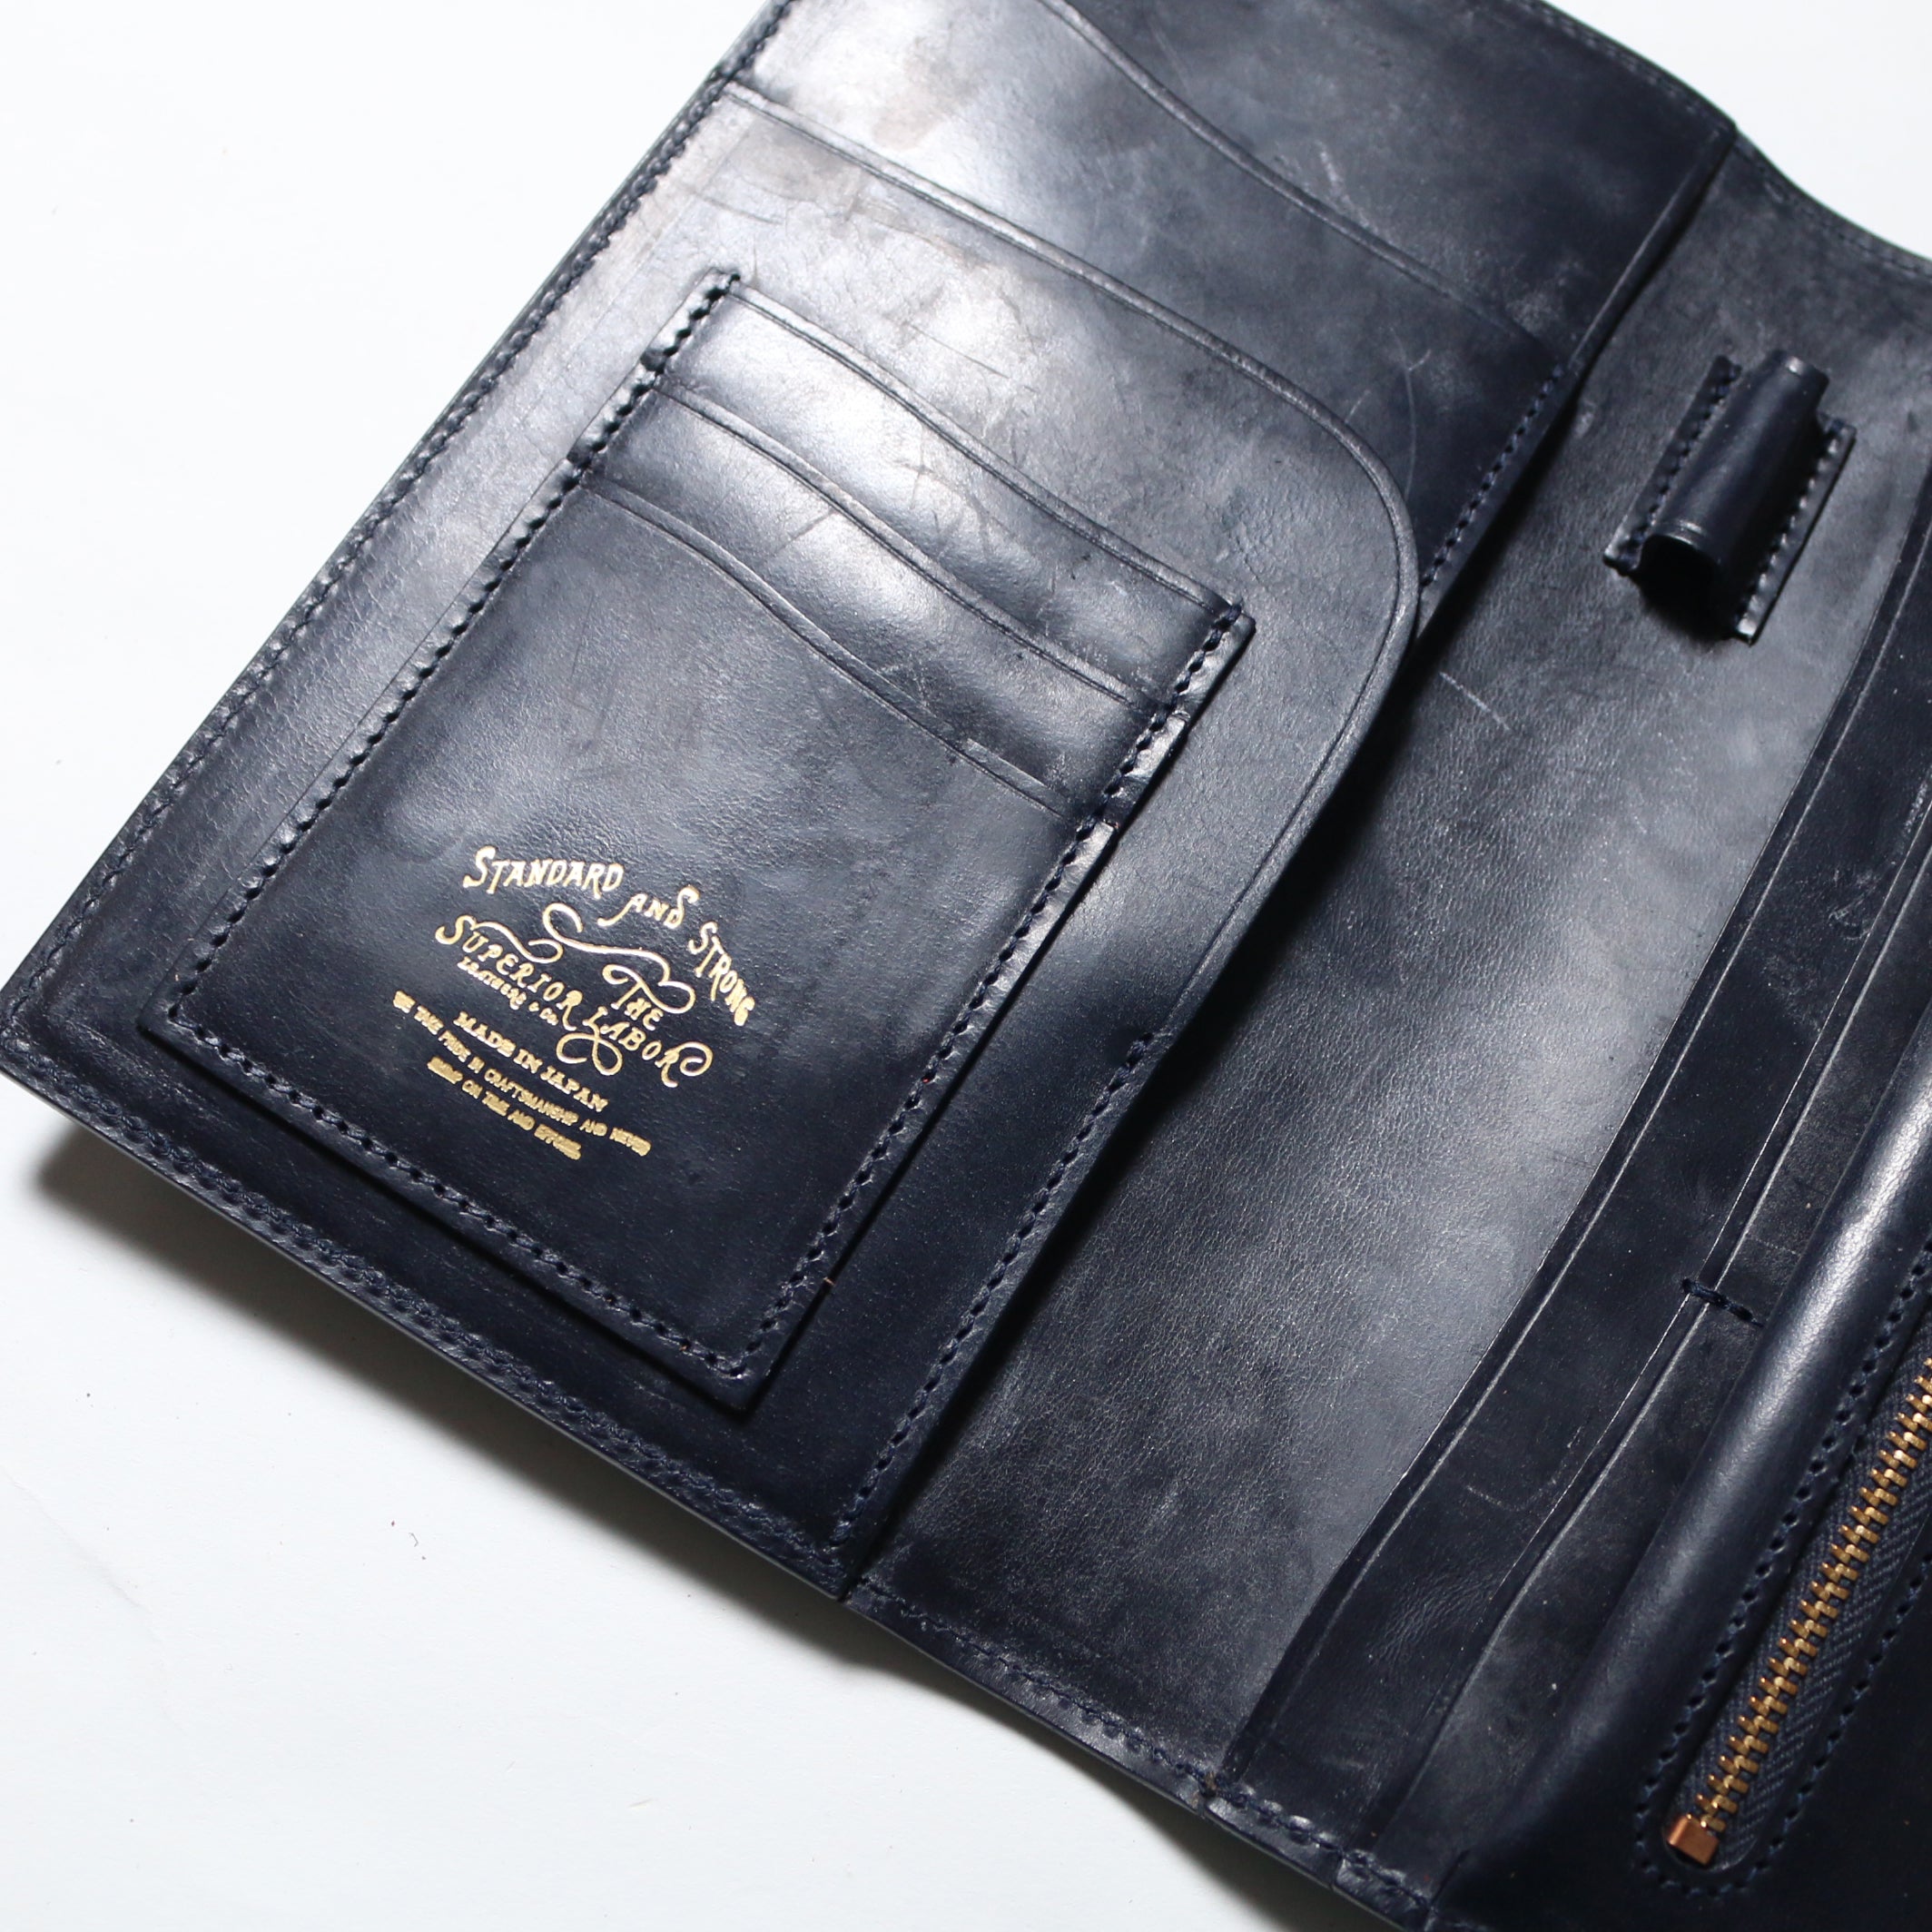 SL173 bridle leather traveler’s purse